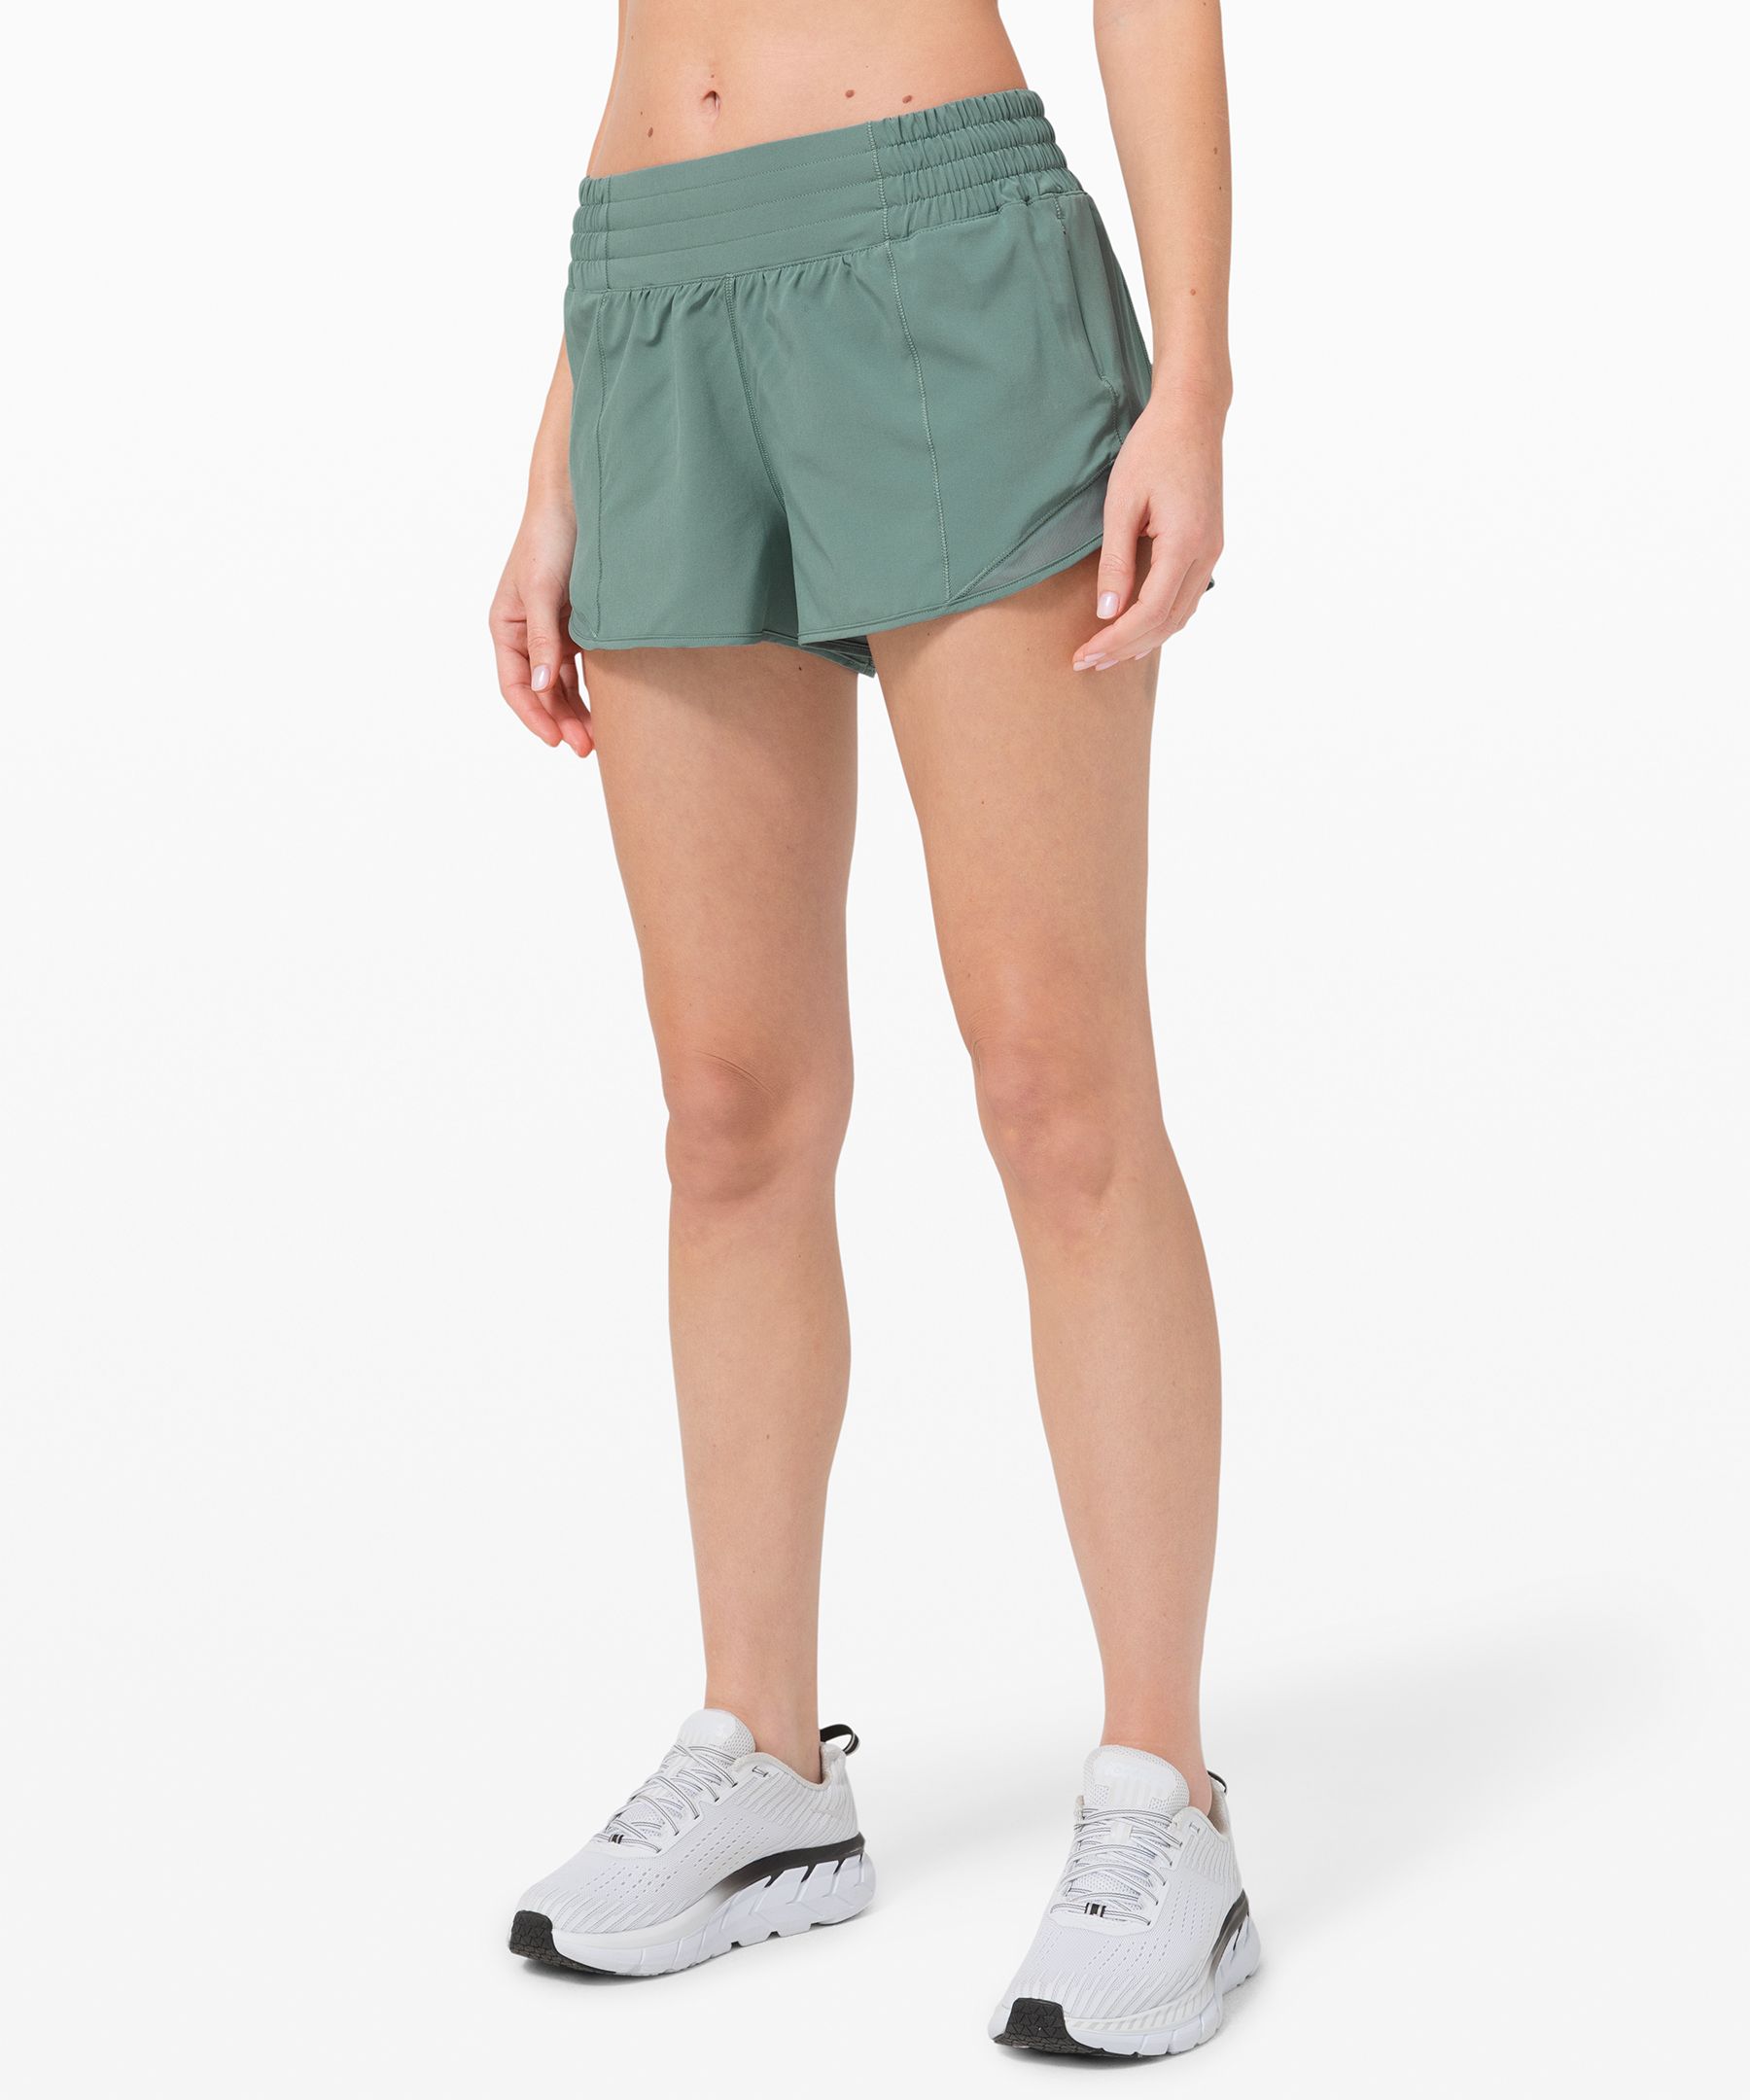 lululemon teal shorts